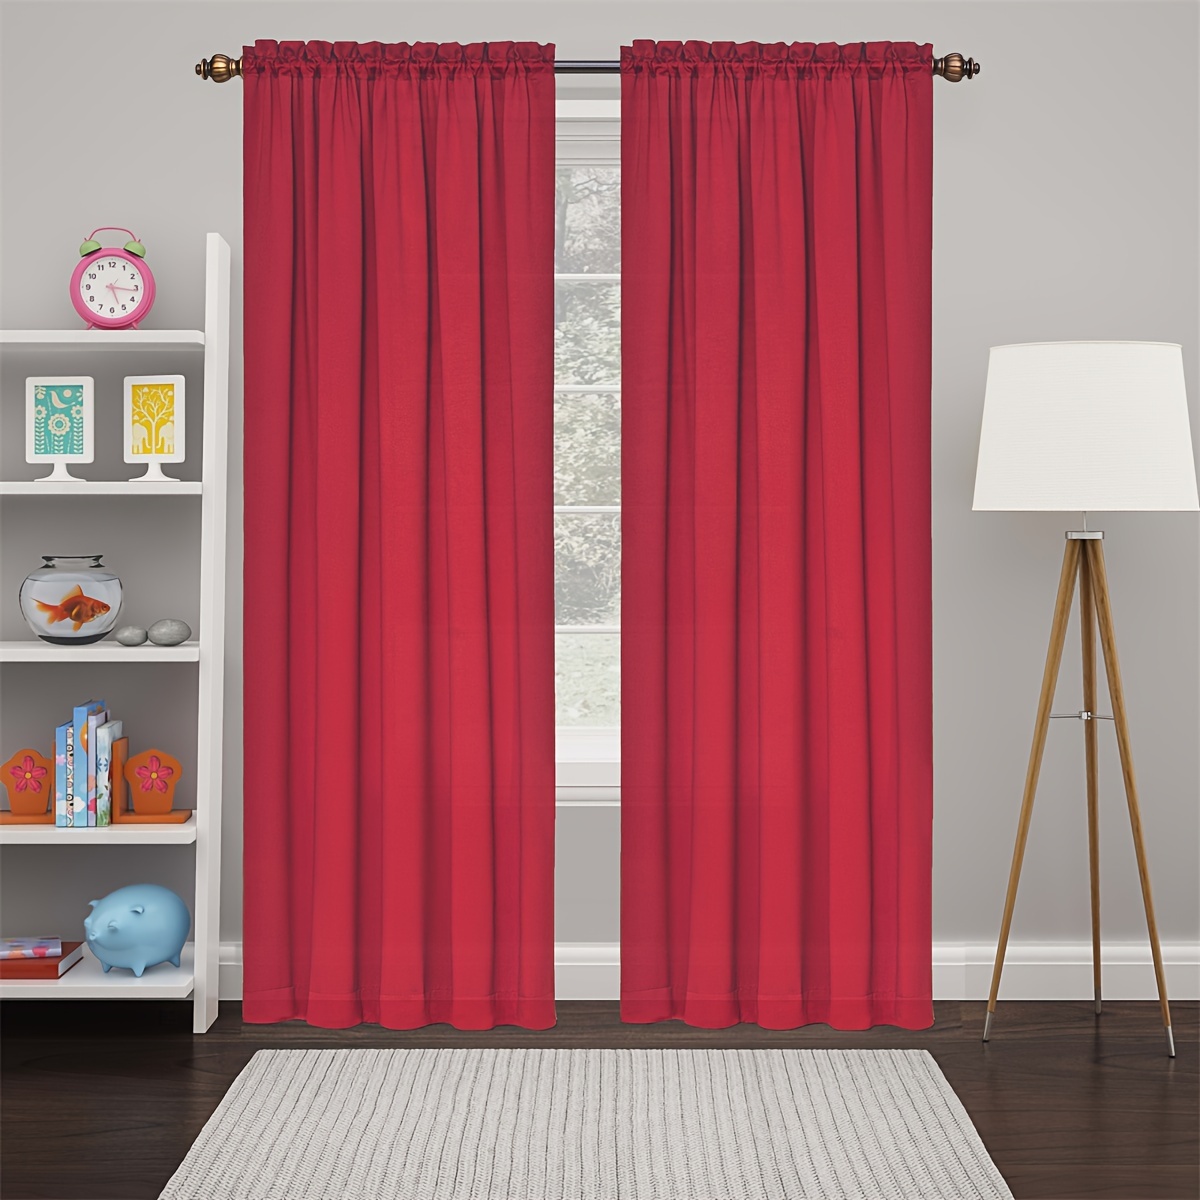 Cortinas opacas de color sólido, cortinas romanas, cortinas